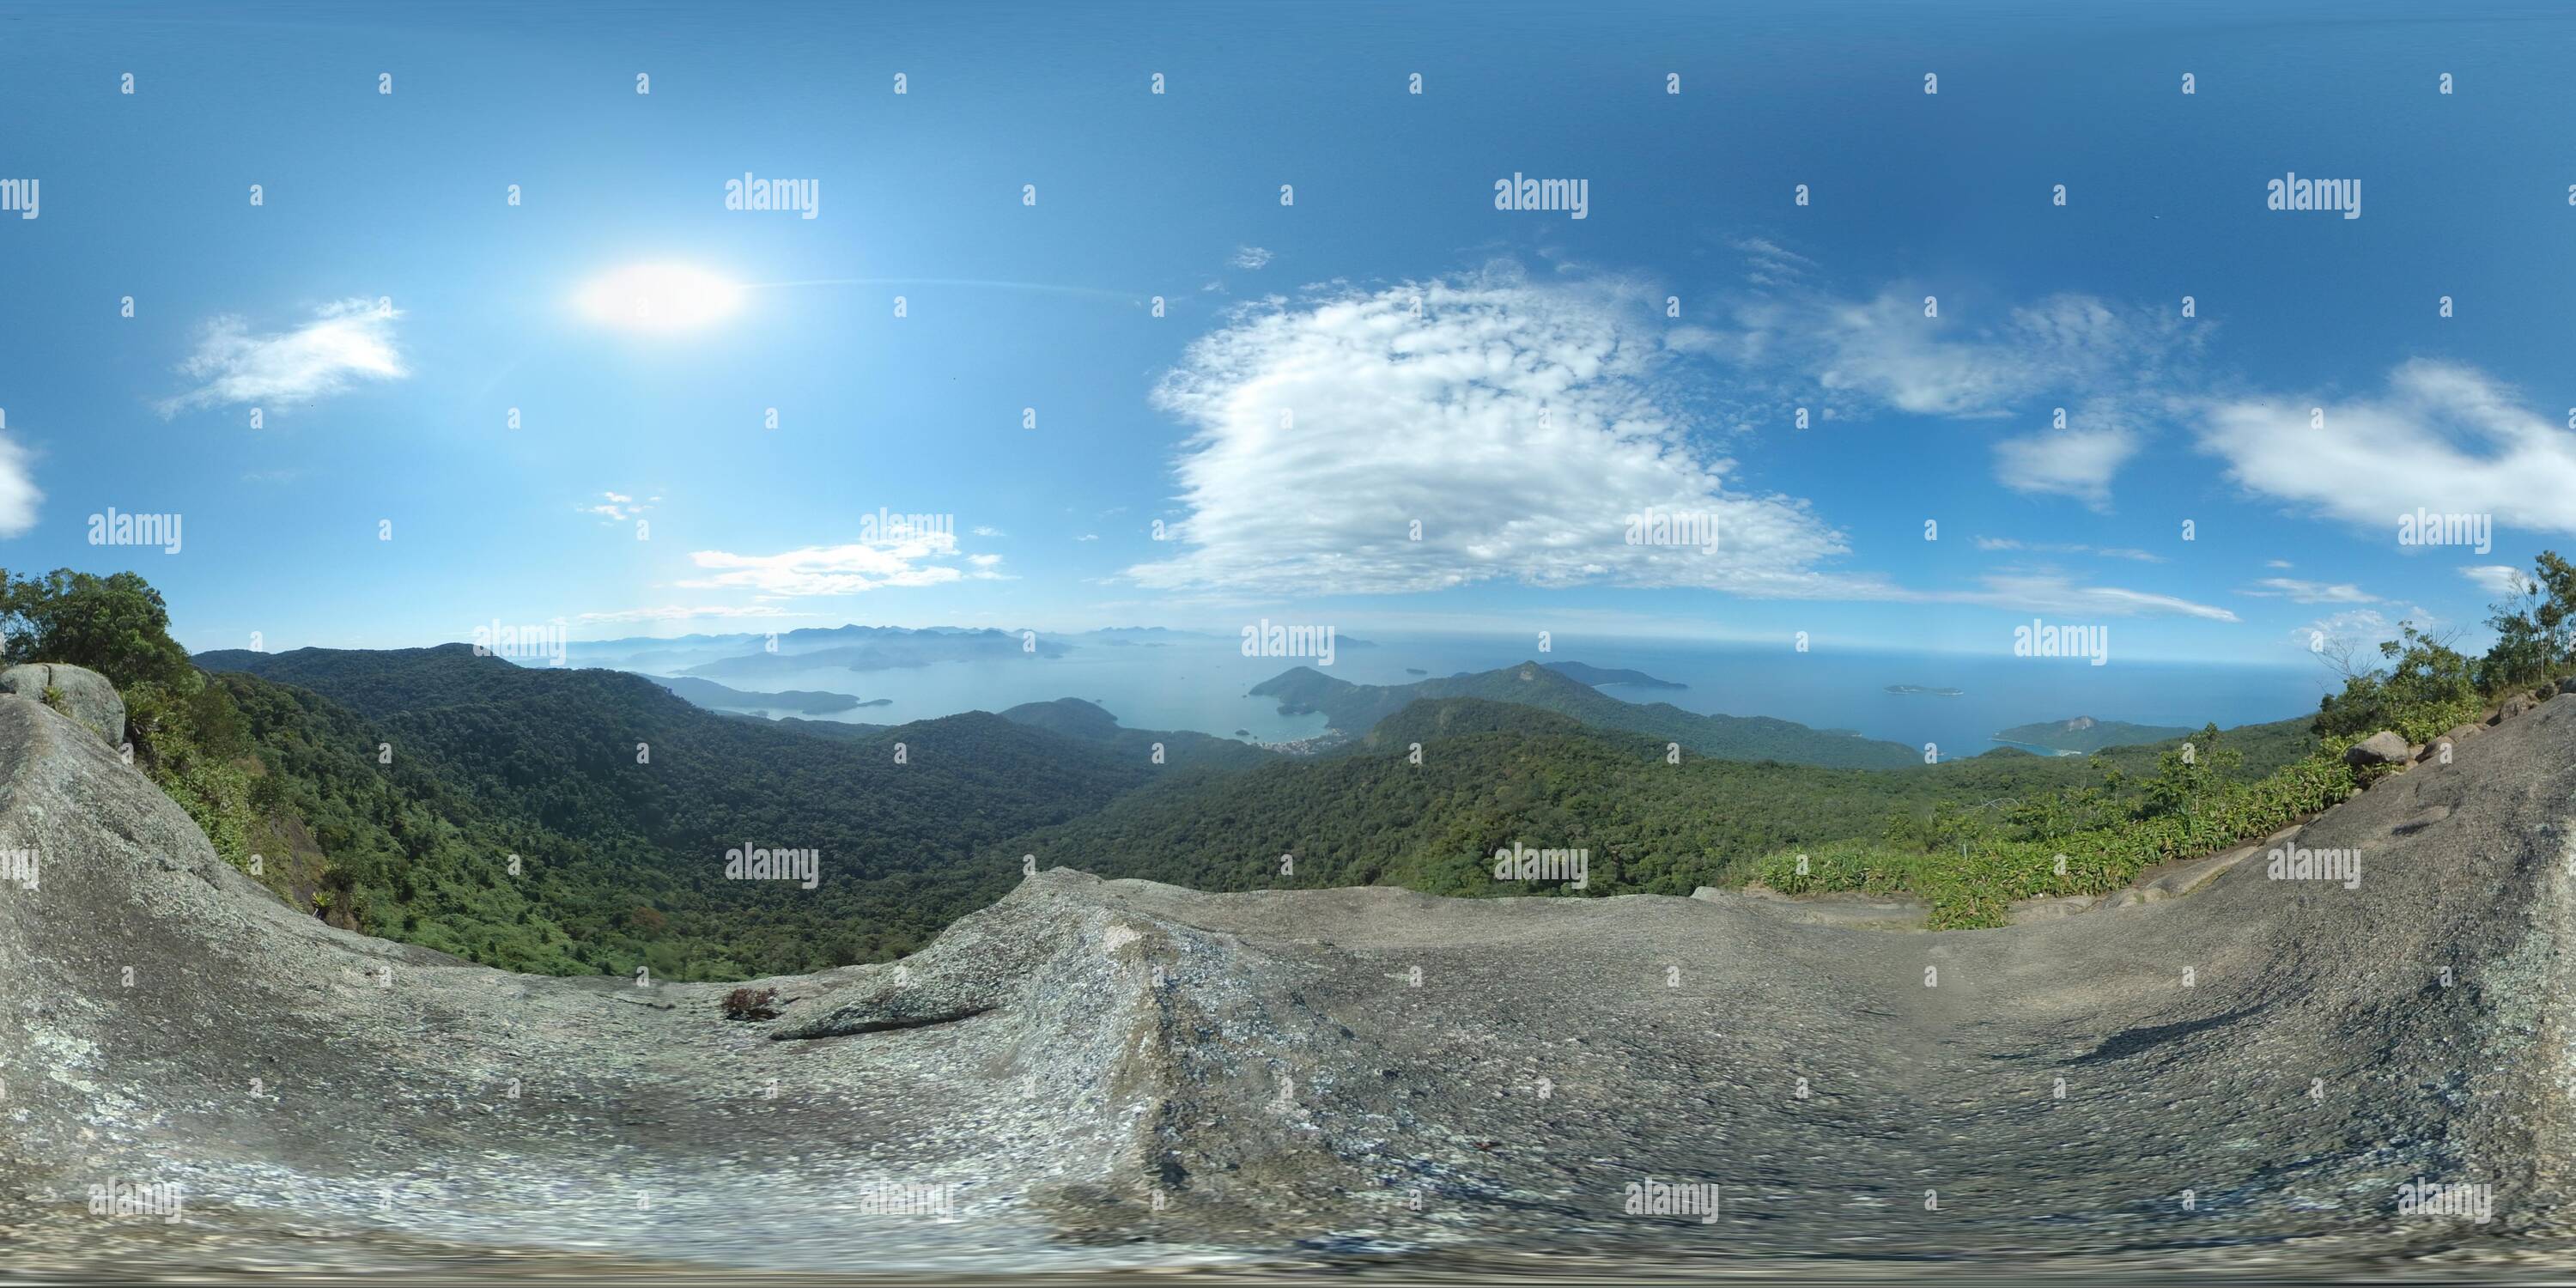 create 360 panorama video vr